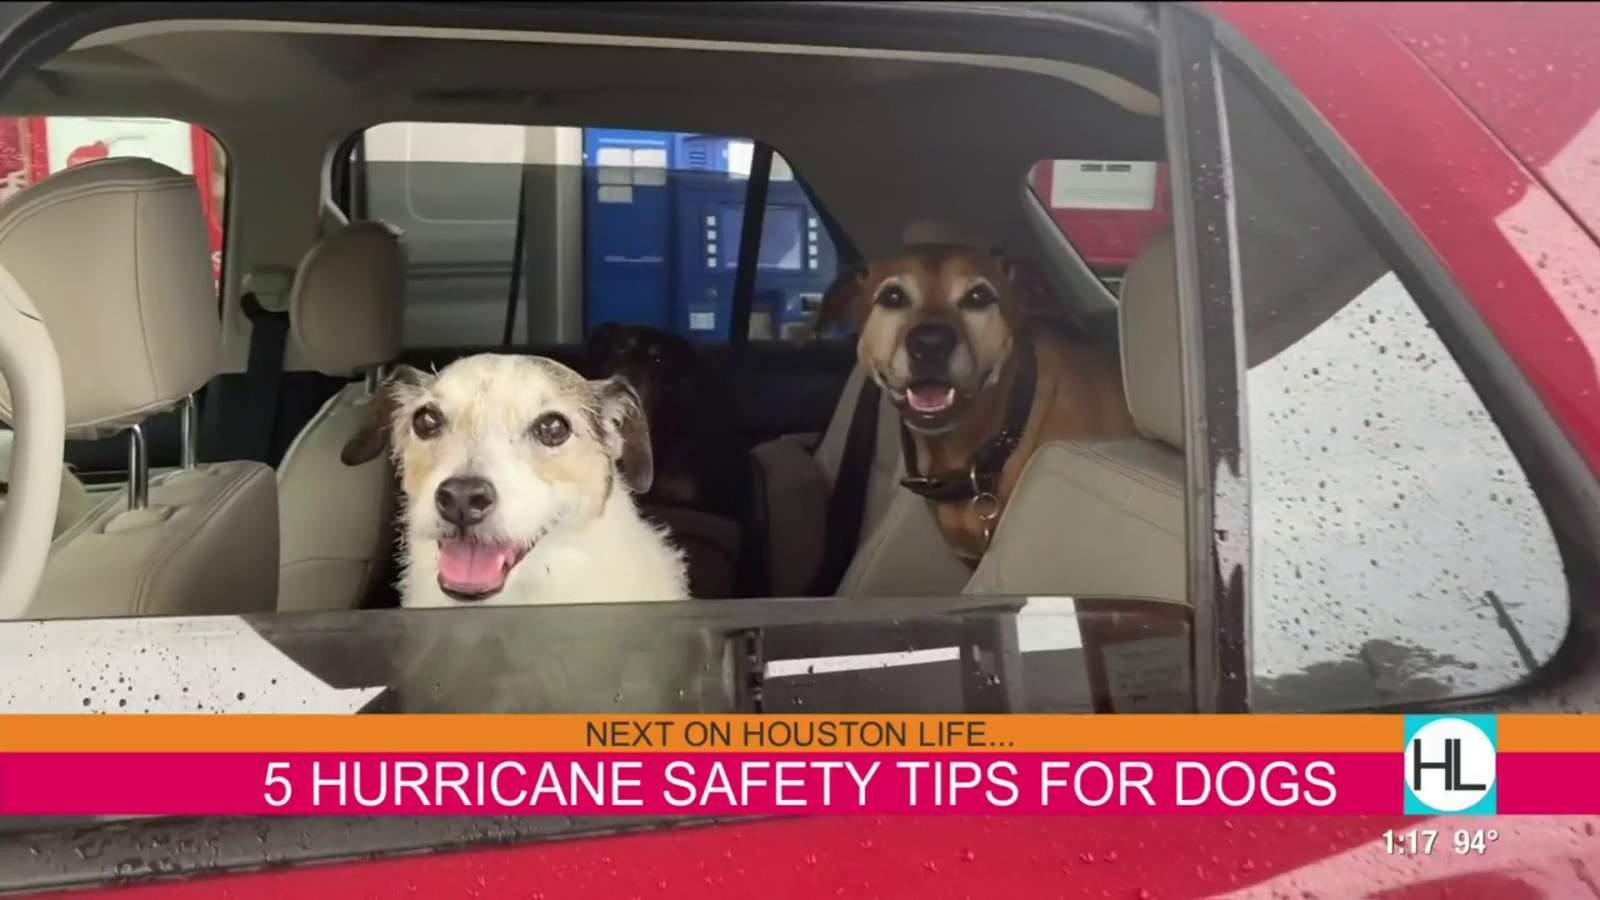 Hurricane preparedness for dogs: Houston puppy trainer shares 5 safety tips | HOUSTON LIFE | KPRC 2